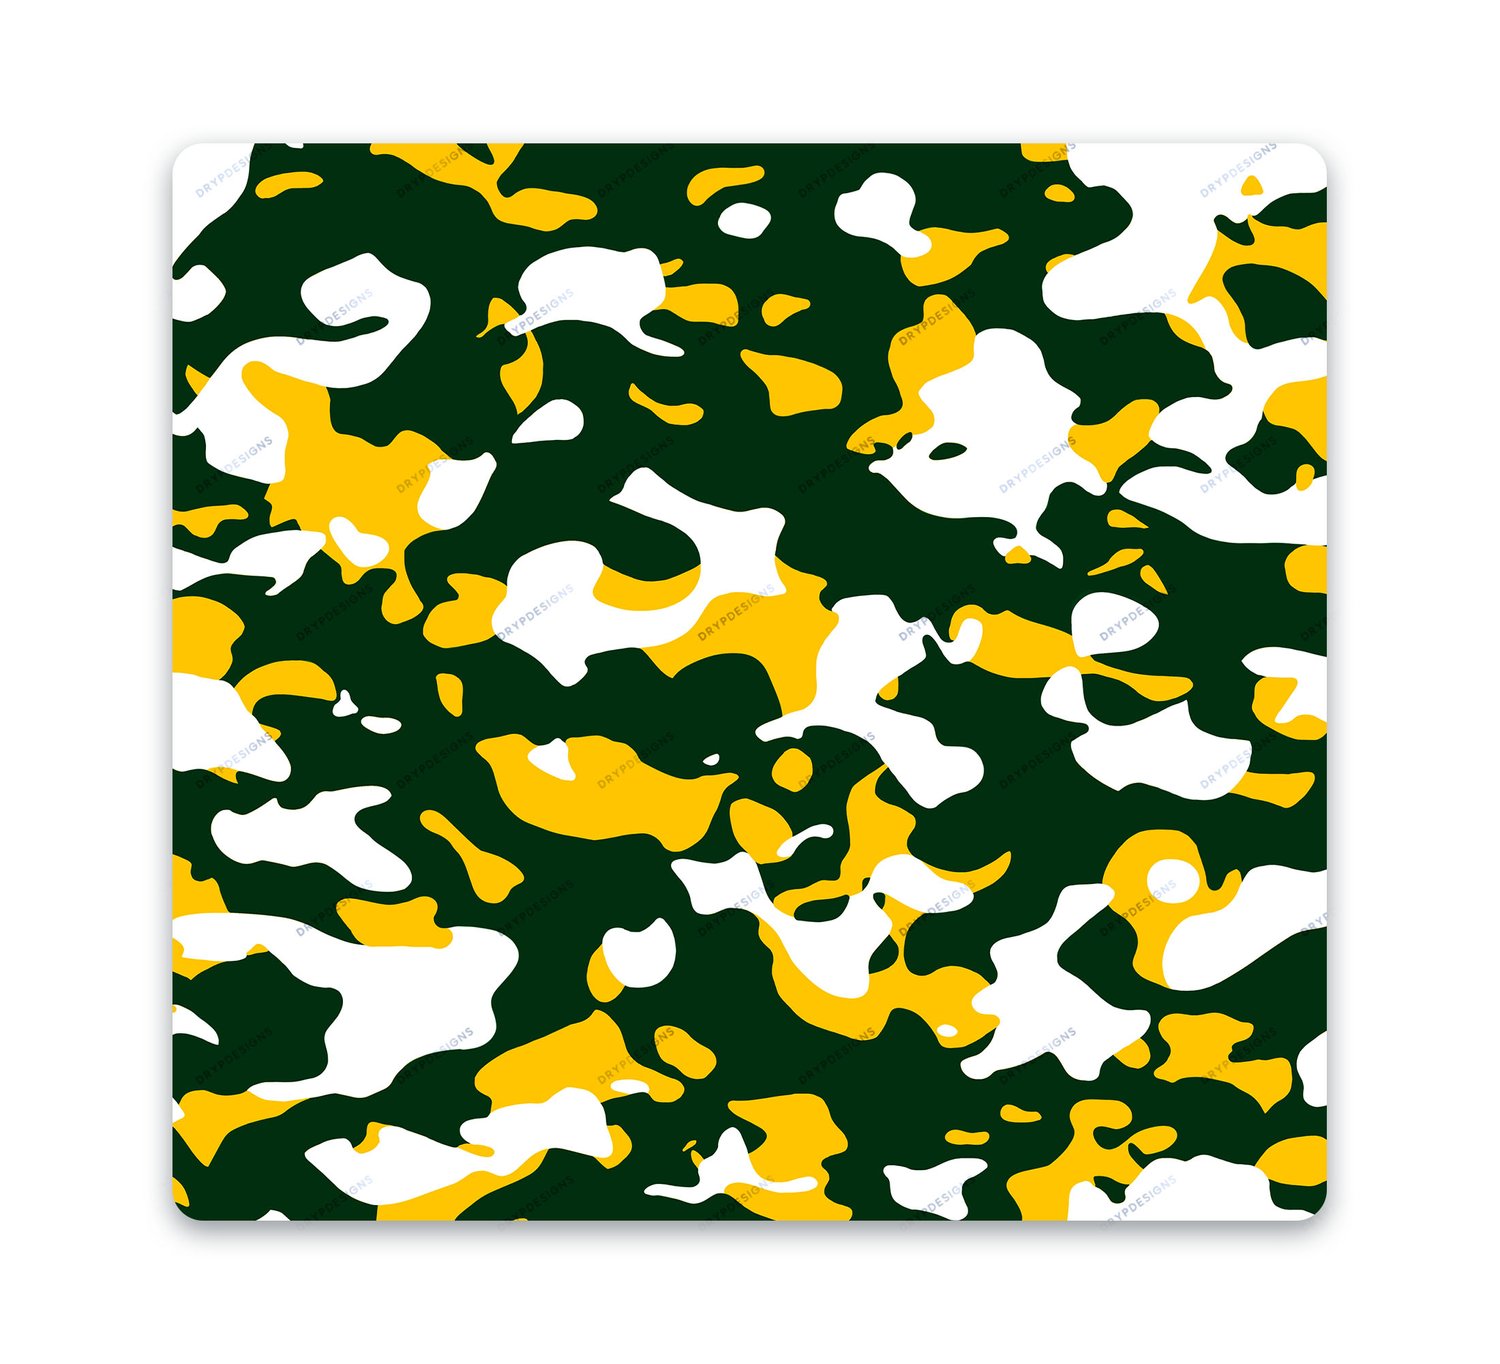 Green White camo camouflage army pattern Art Print